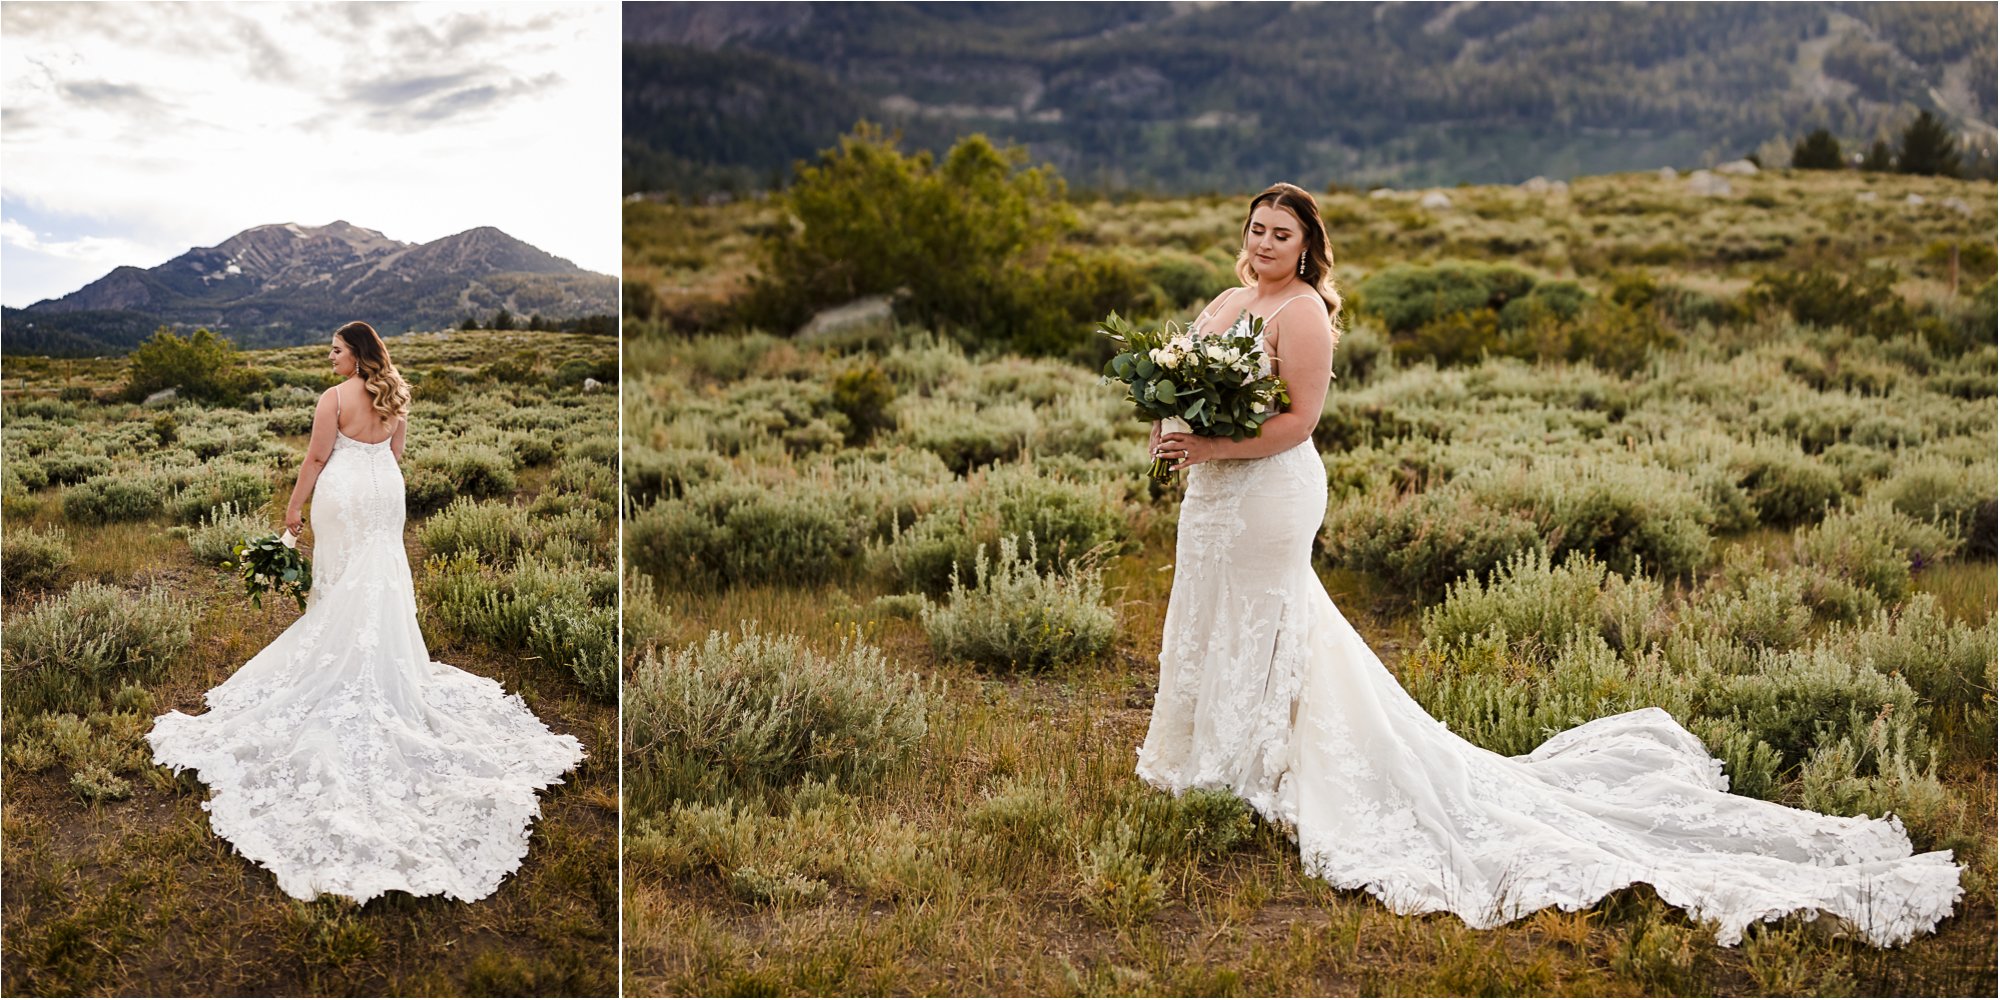 Sierra-Meadows-Ranch-Mammoth-Lakes-Wedding-Bride.jpg